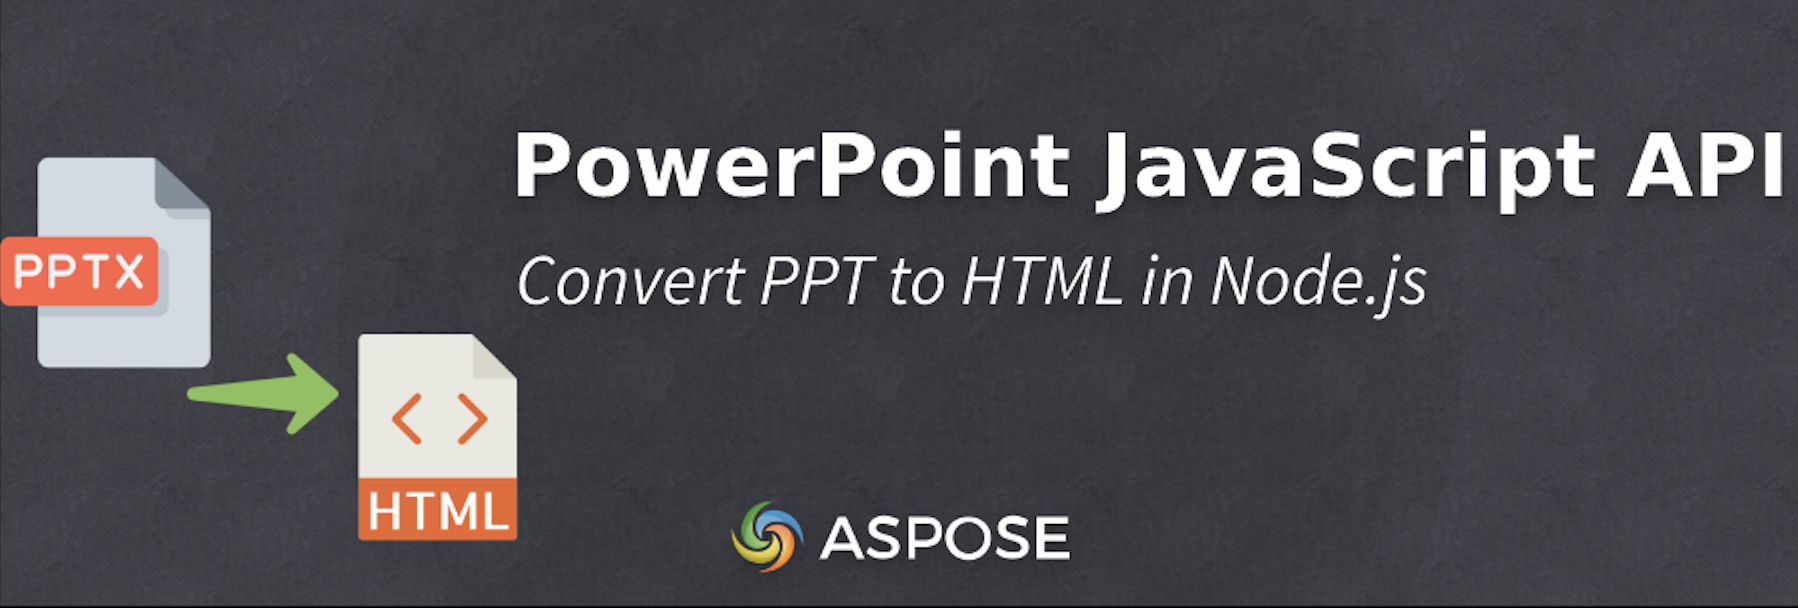 Konwertuj PPT na HTML w Node.js — API JavaScript programu PowerPoint